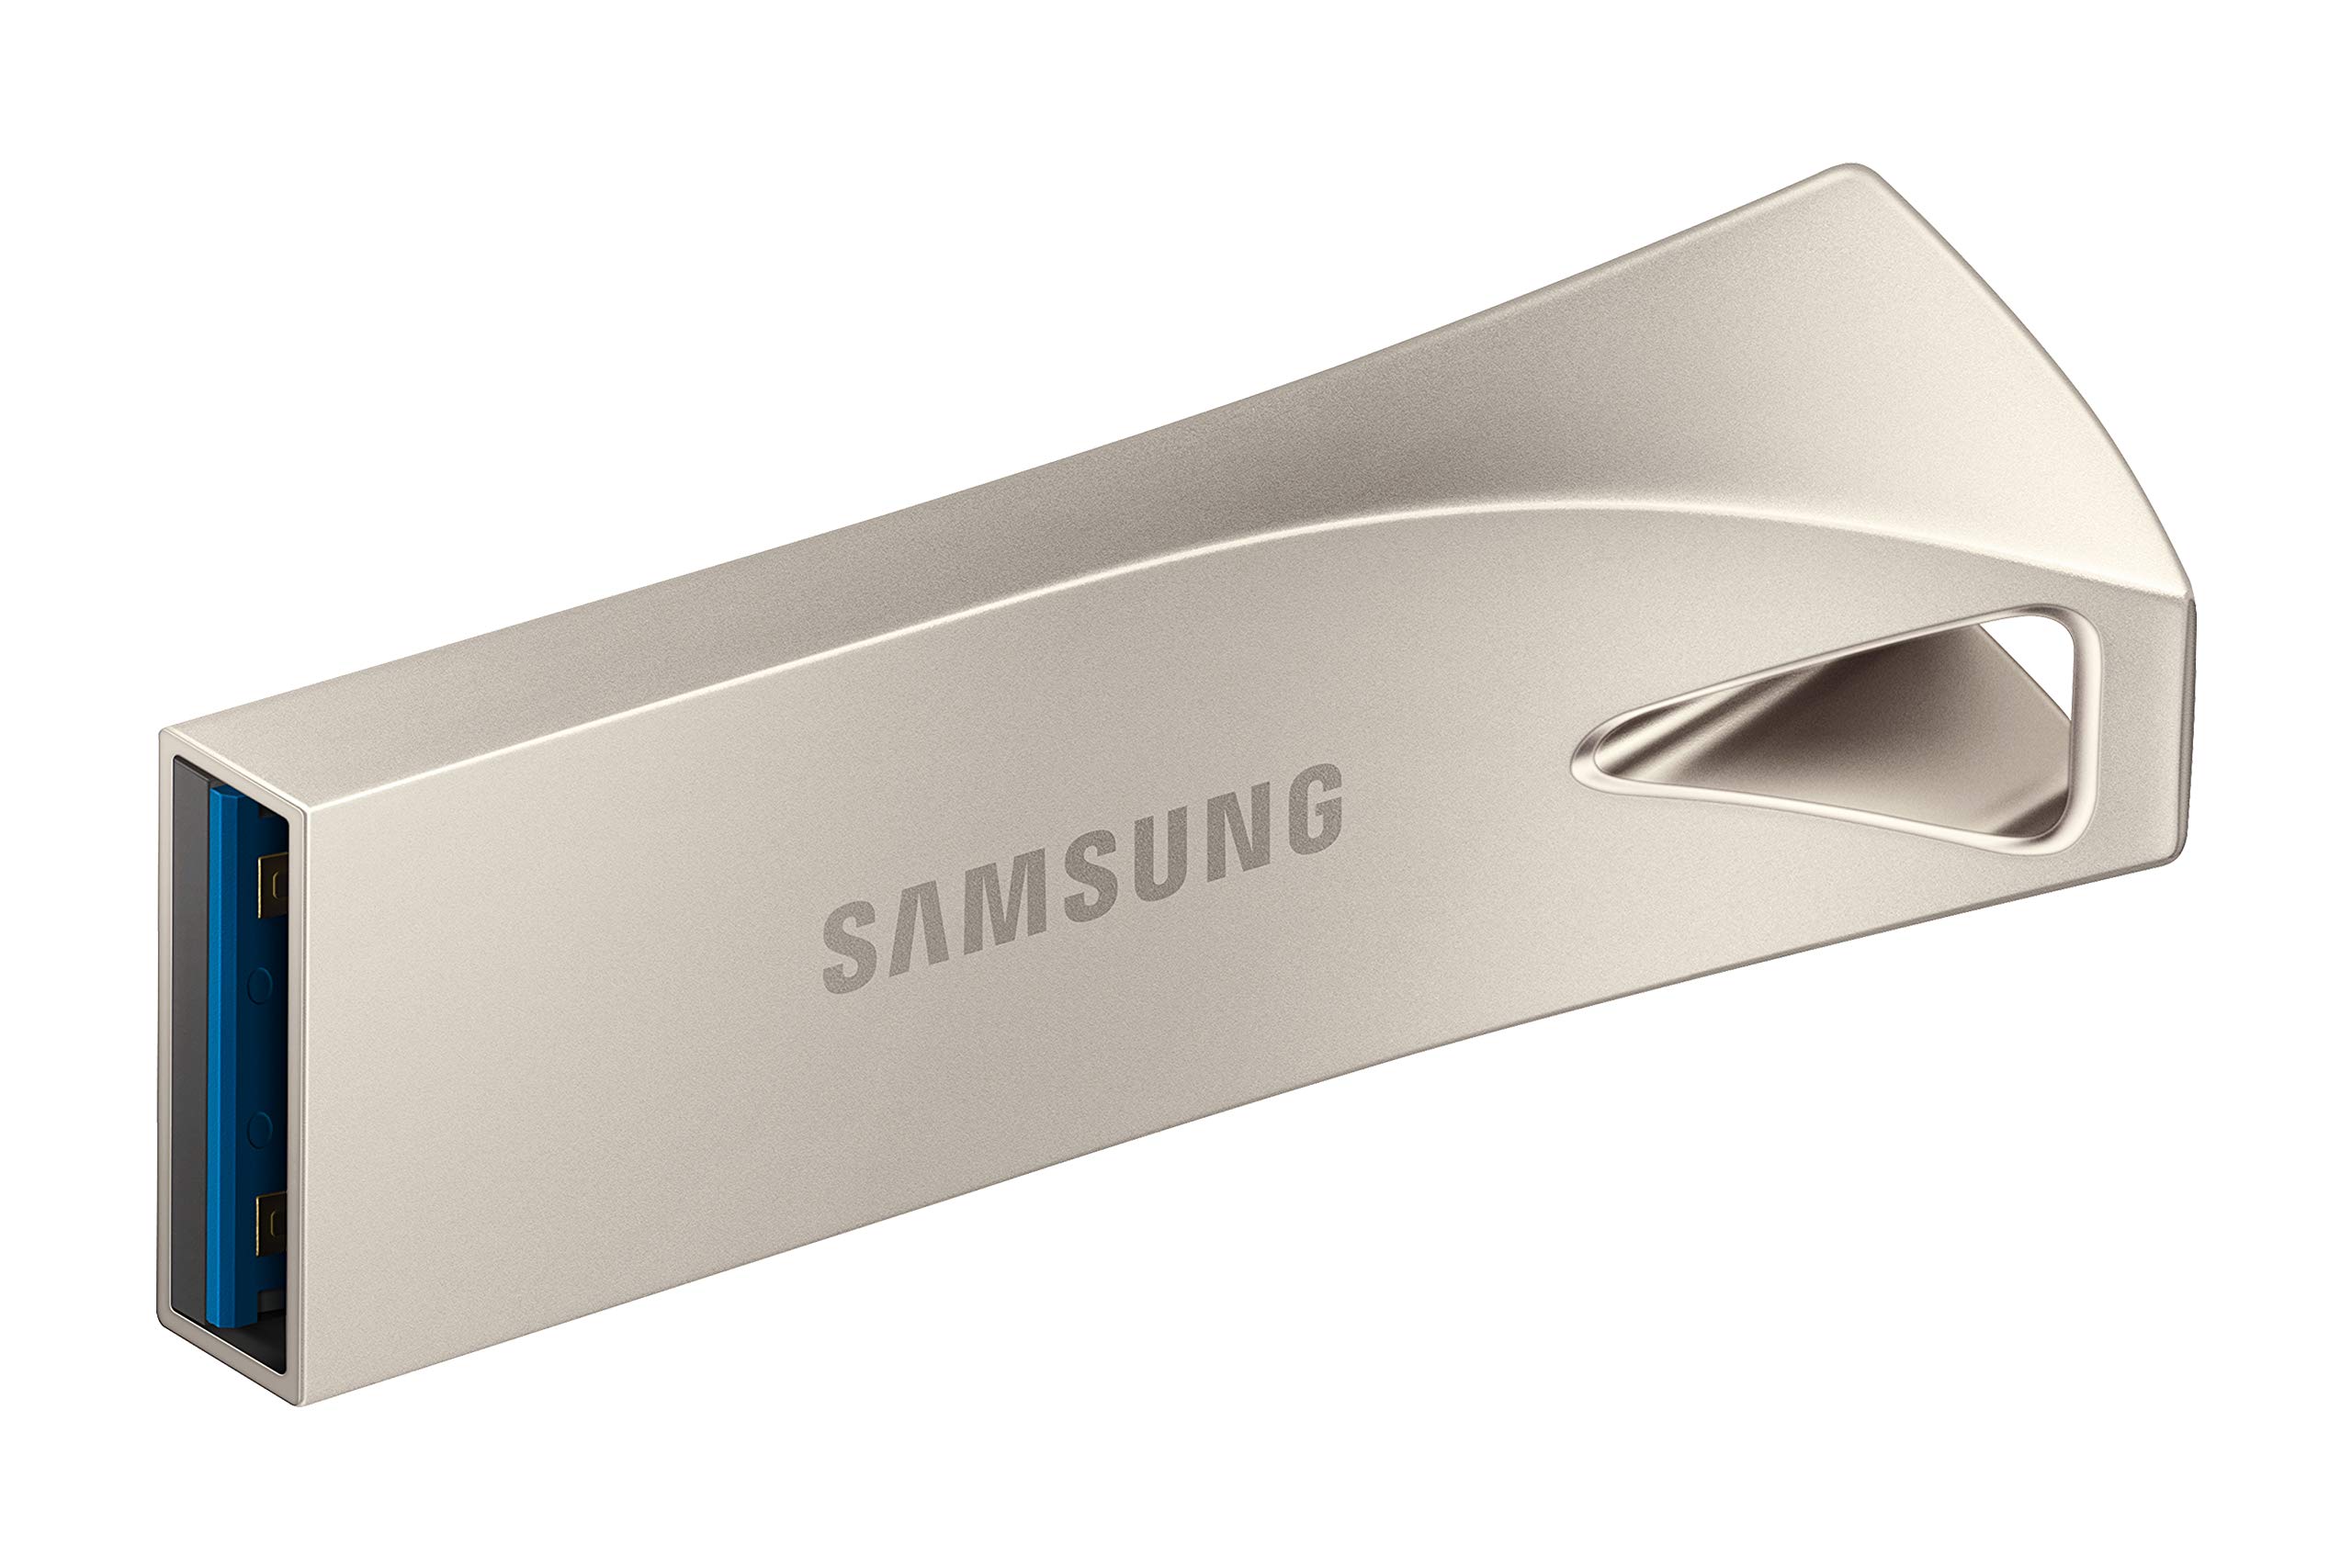 SAMSUNG BAR Plus 256GB - 400MB/s USB 3.1 Flash Drive Champagne Silver $23.99